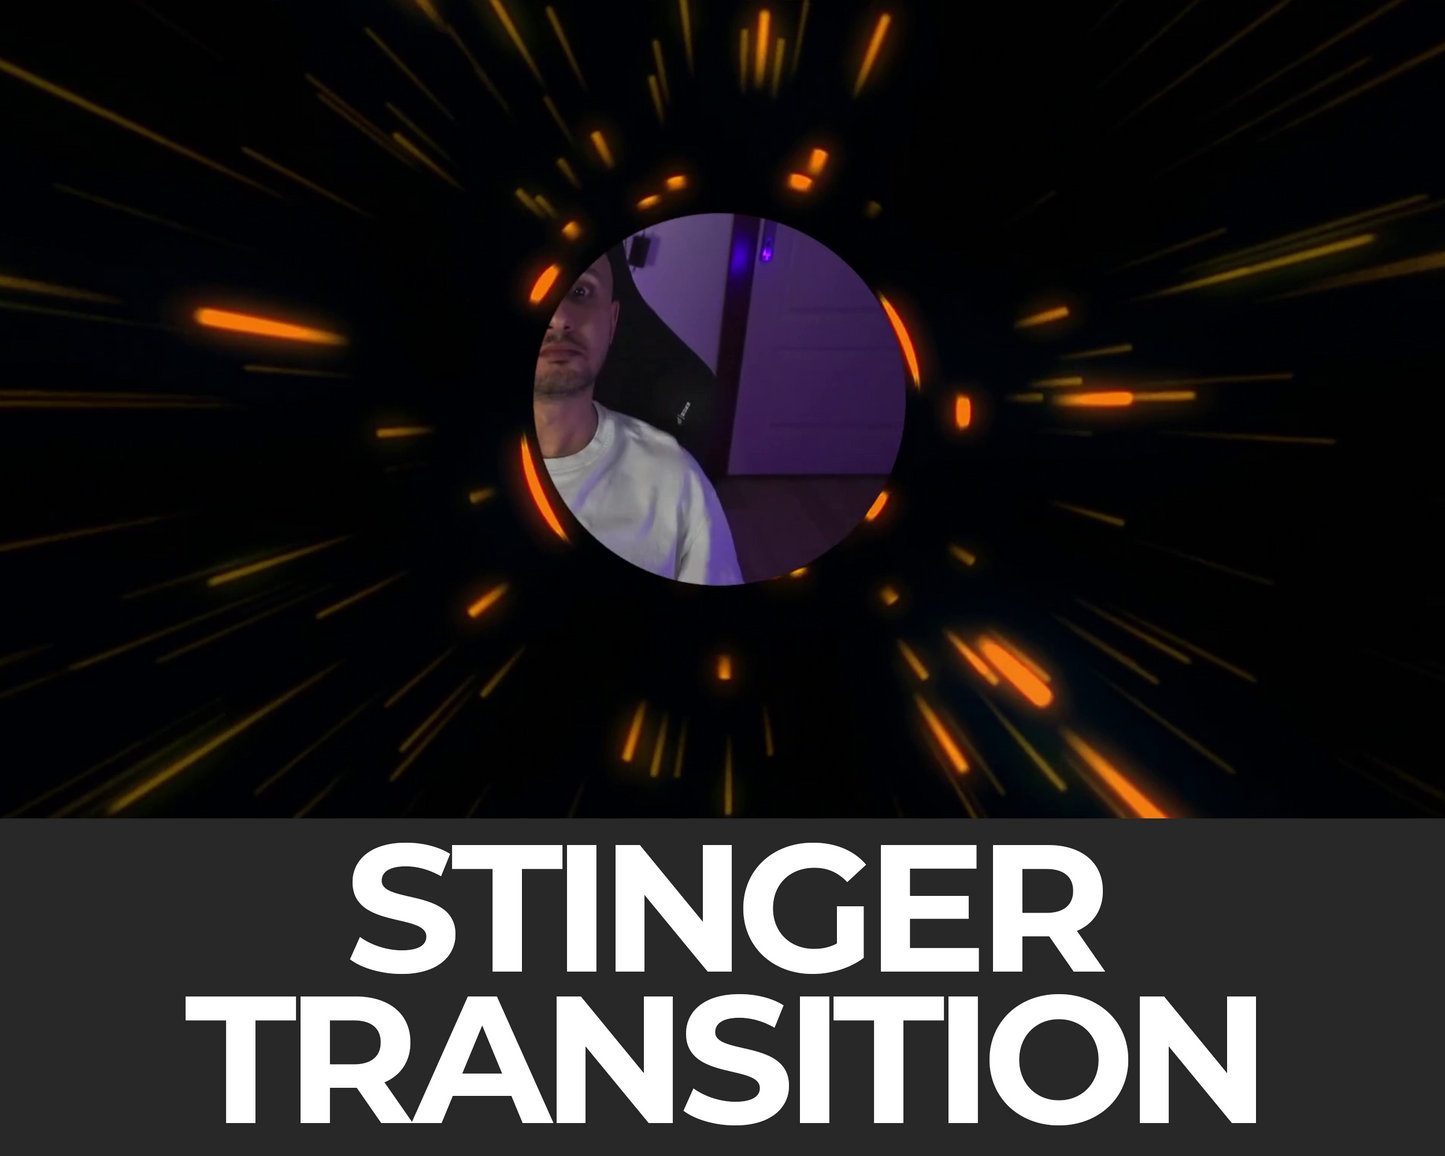 Space Travel Stinger Transition